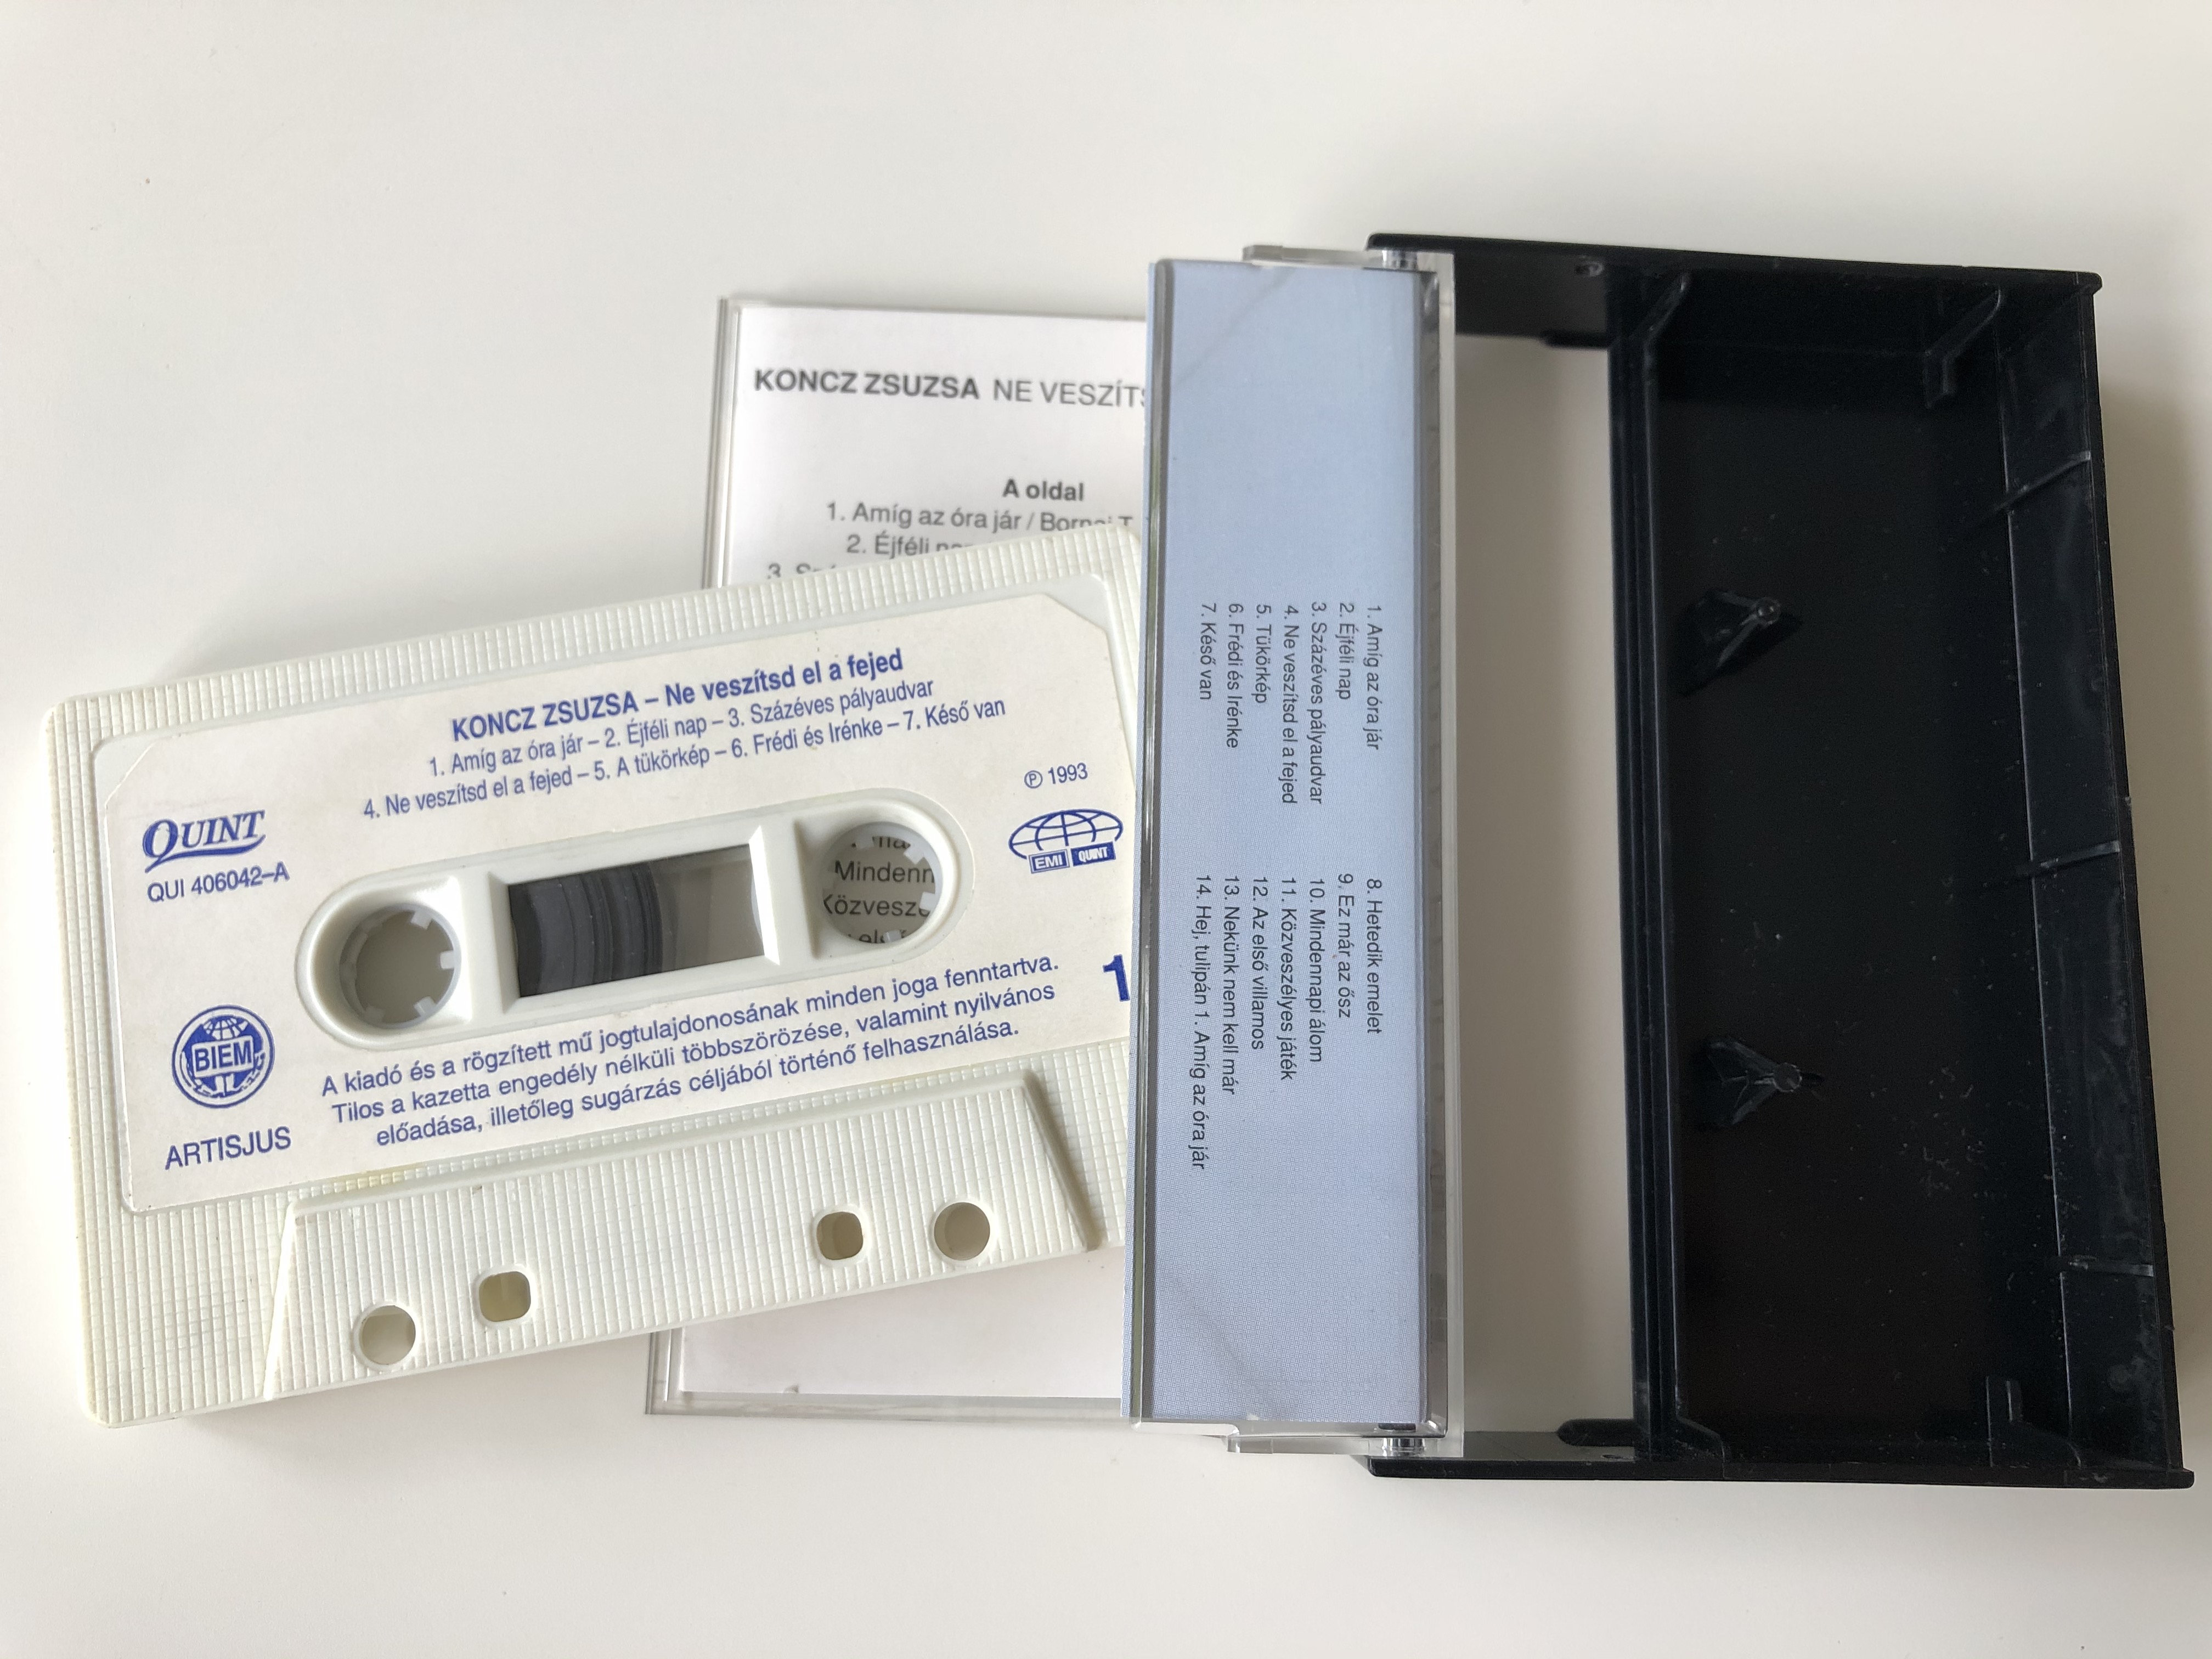 koncz-zsuzsa-ne-vesz-tsd-el-a-fejed-emi-quint-2x-audio-cassette-1993-qui-406042-3-.jpg